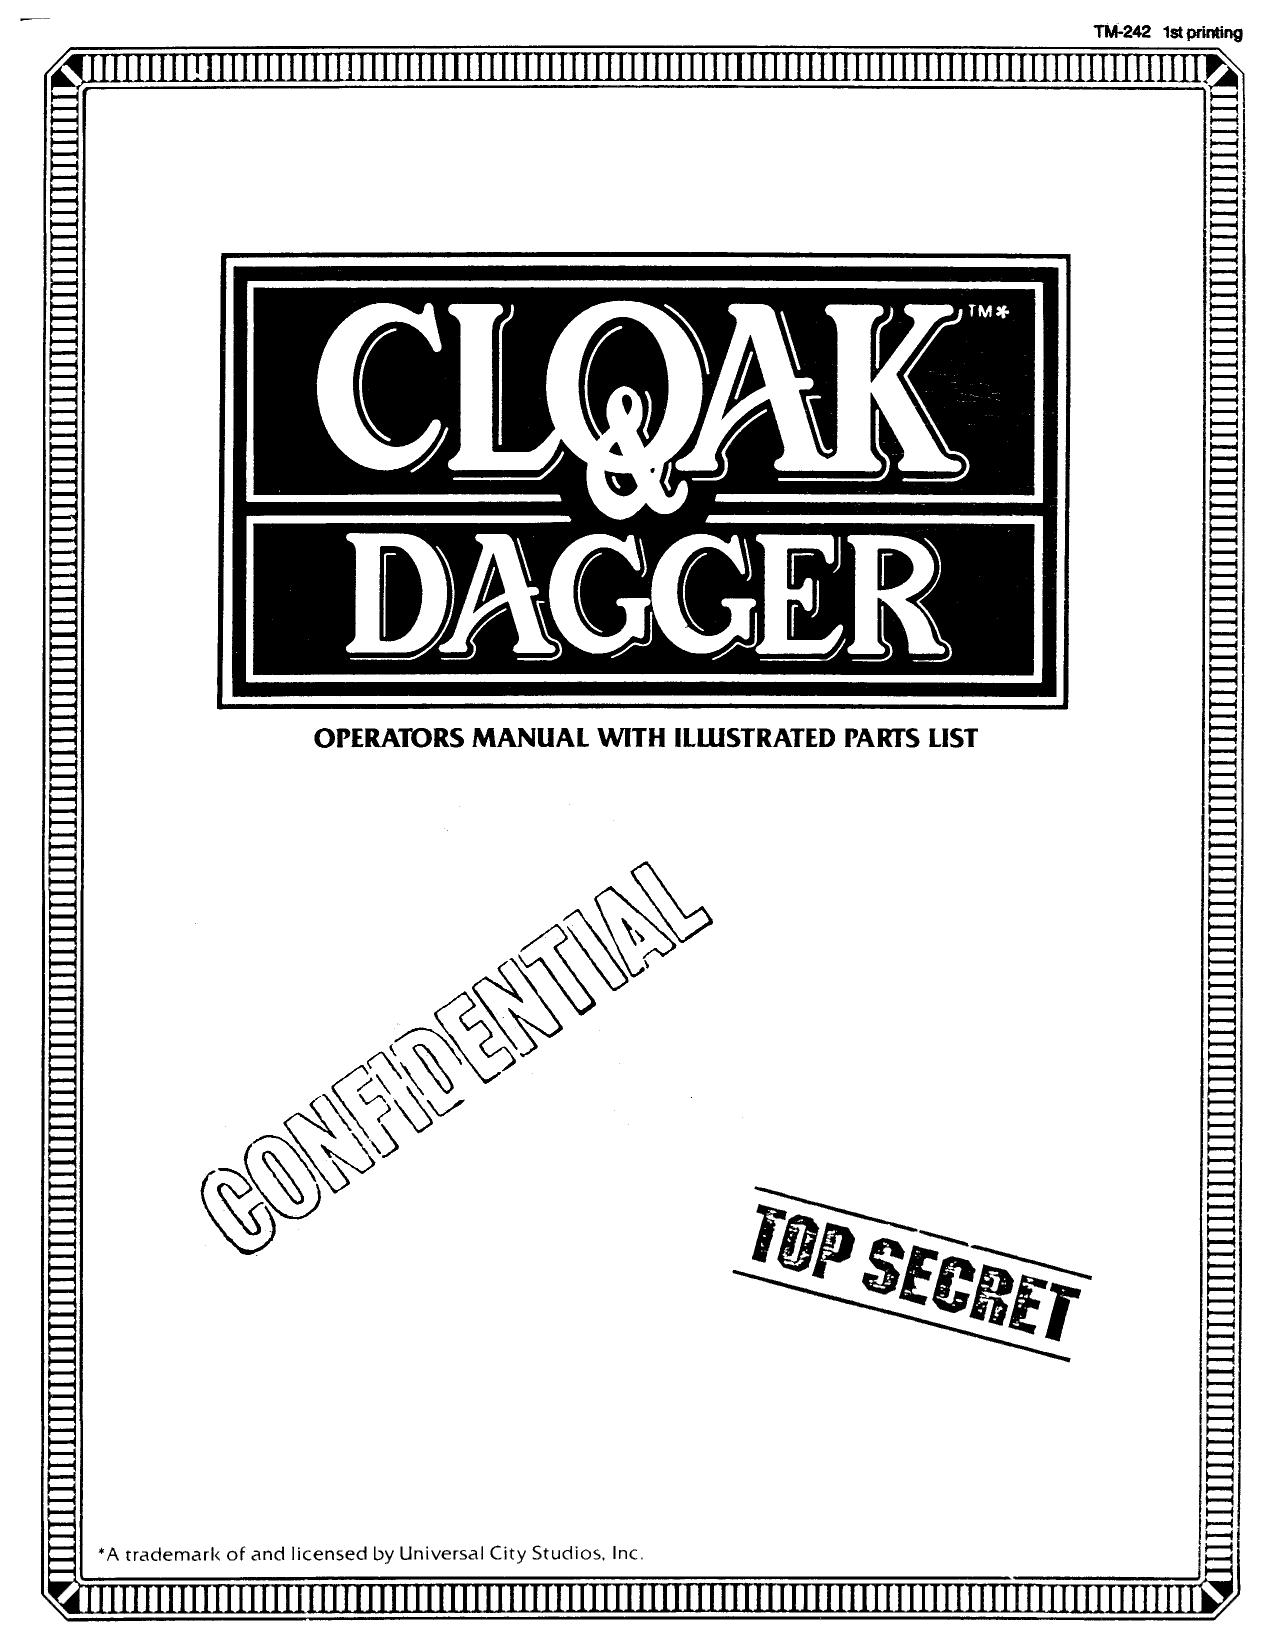 Cloak and Dagger TM-242 1st Printing